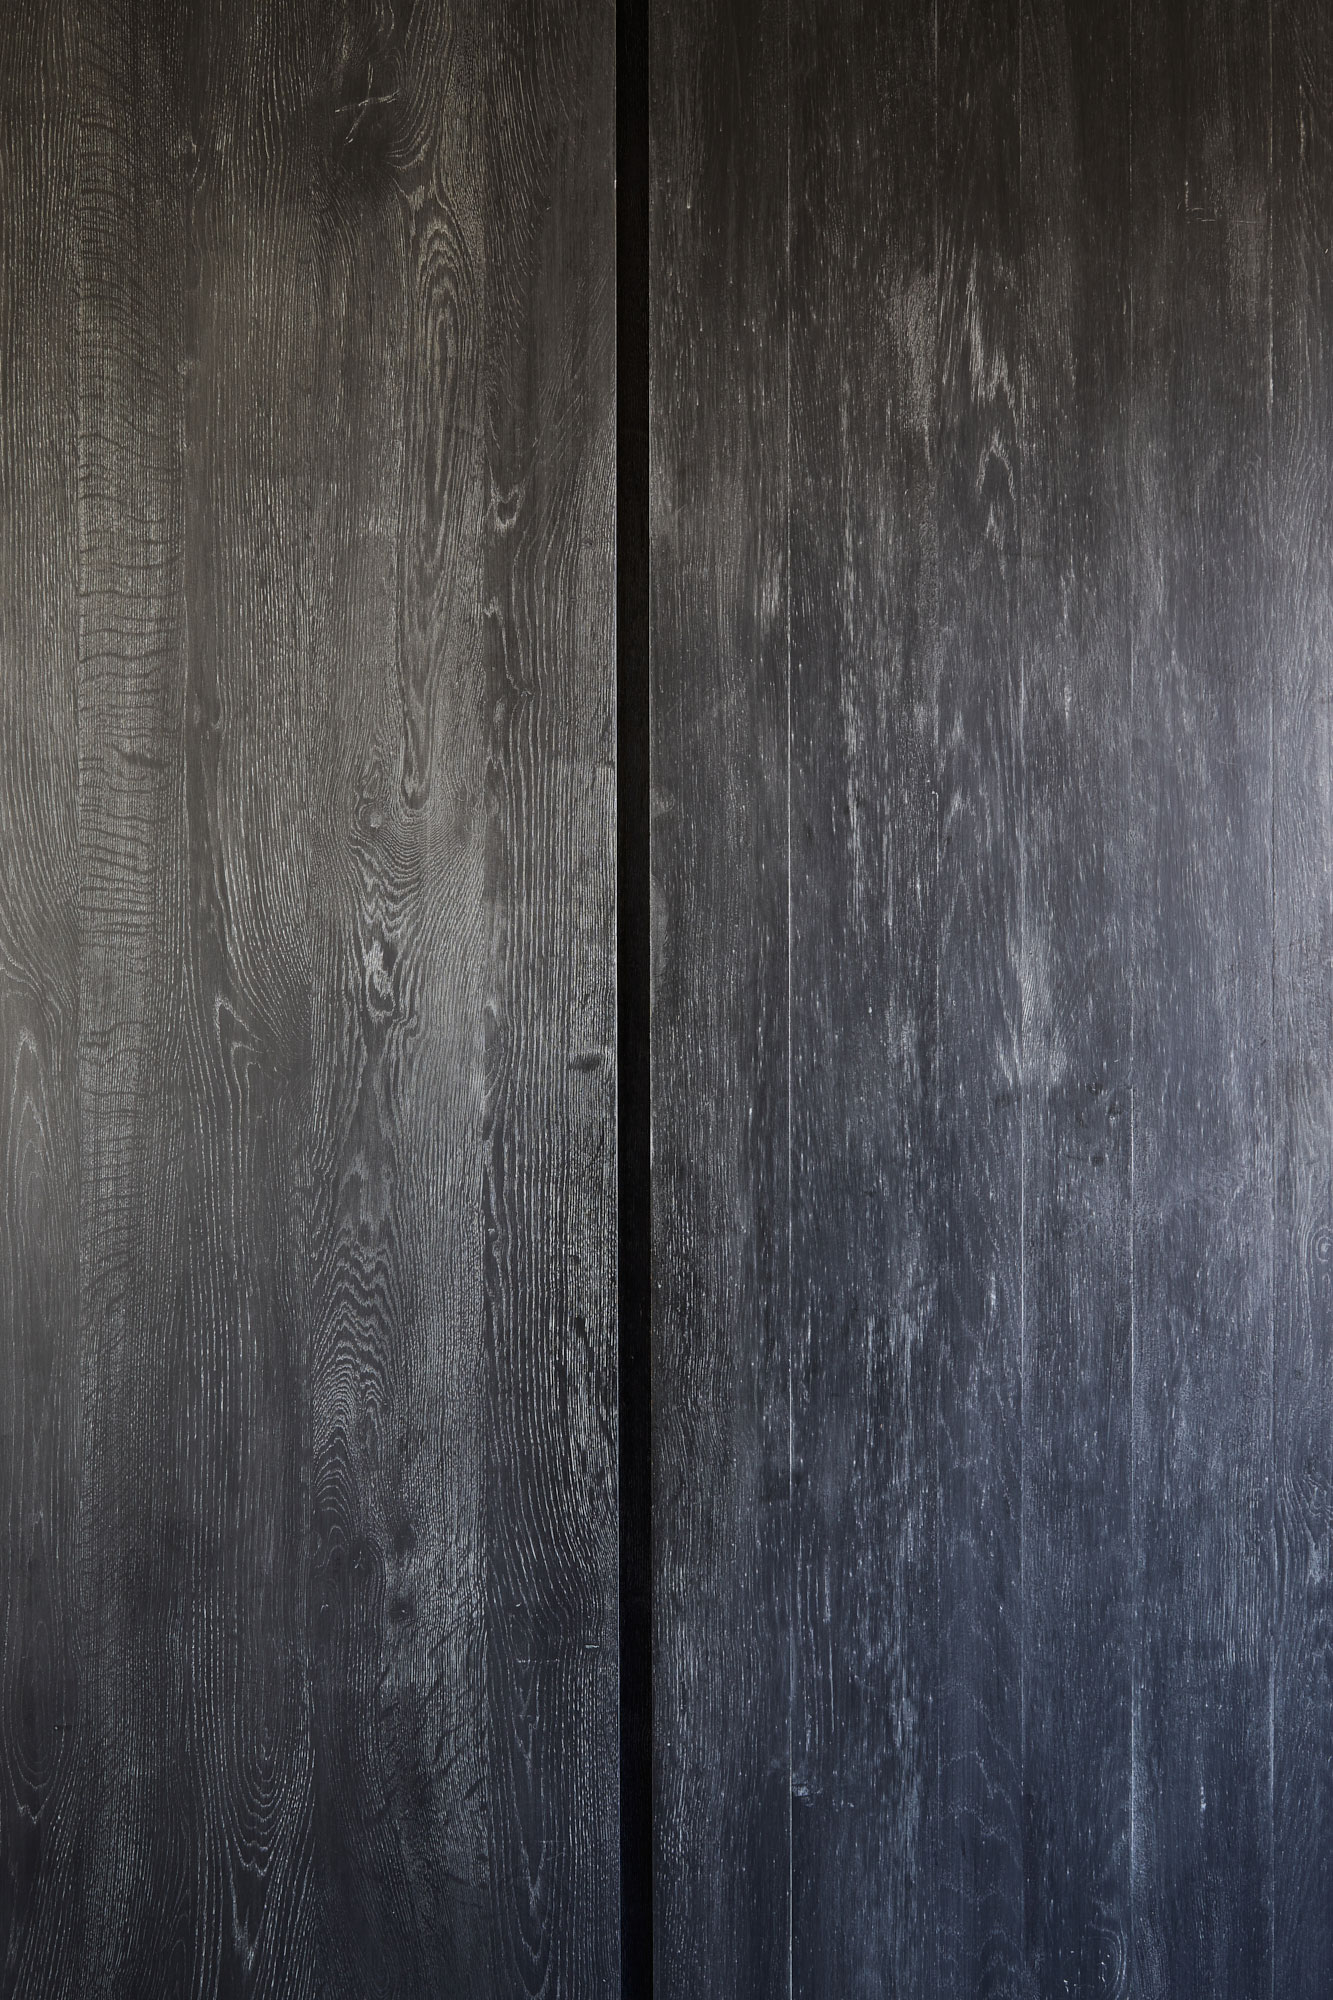 Black oak grain used for bespoke kitchen cabinet fronts